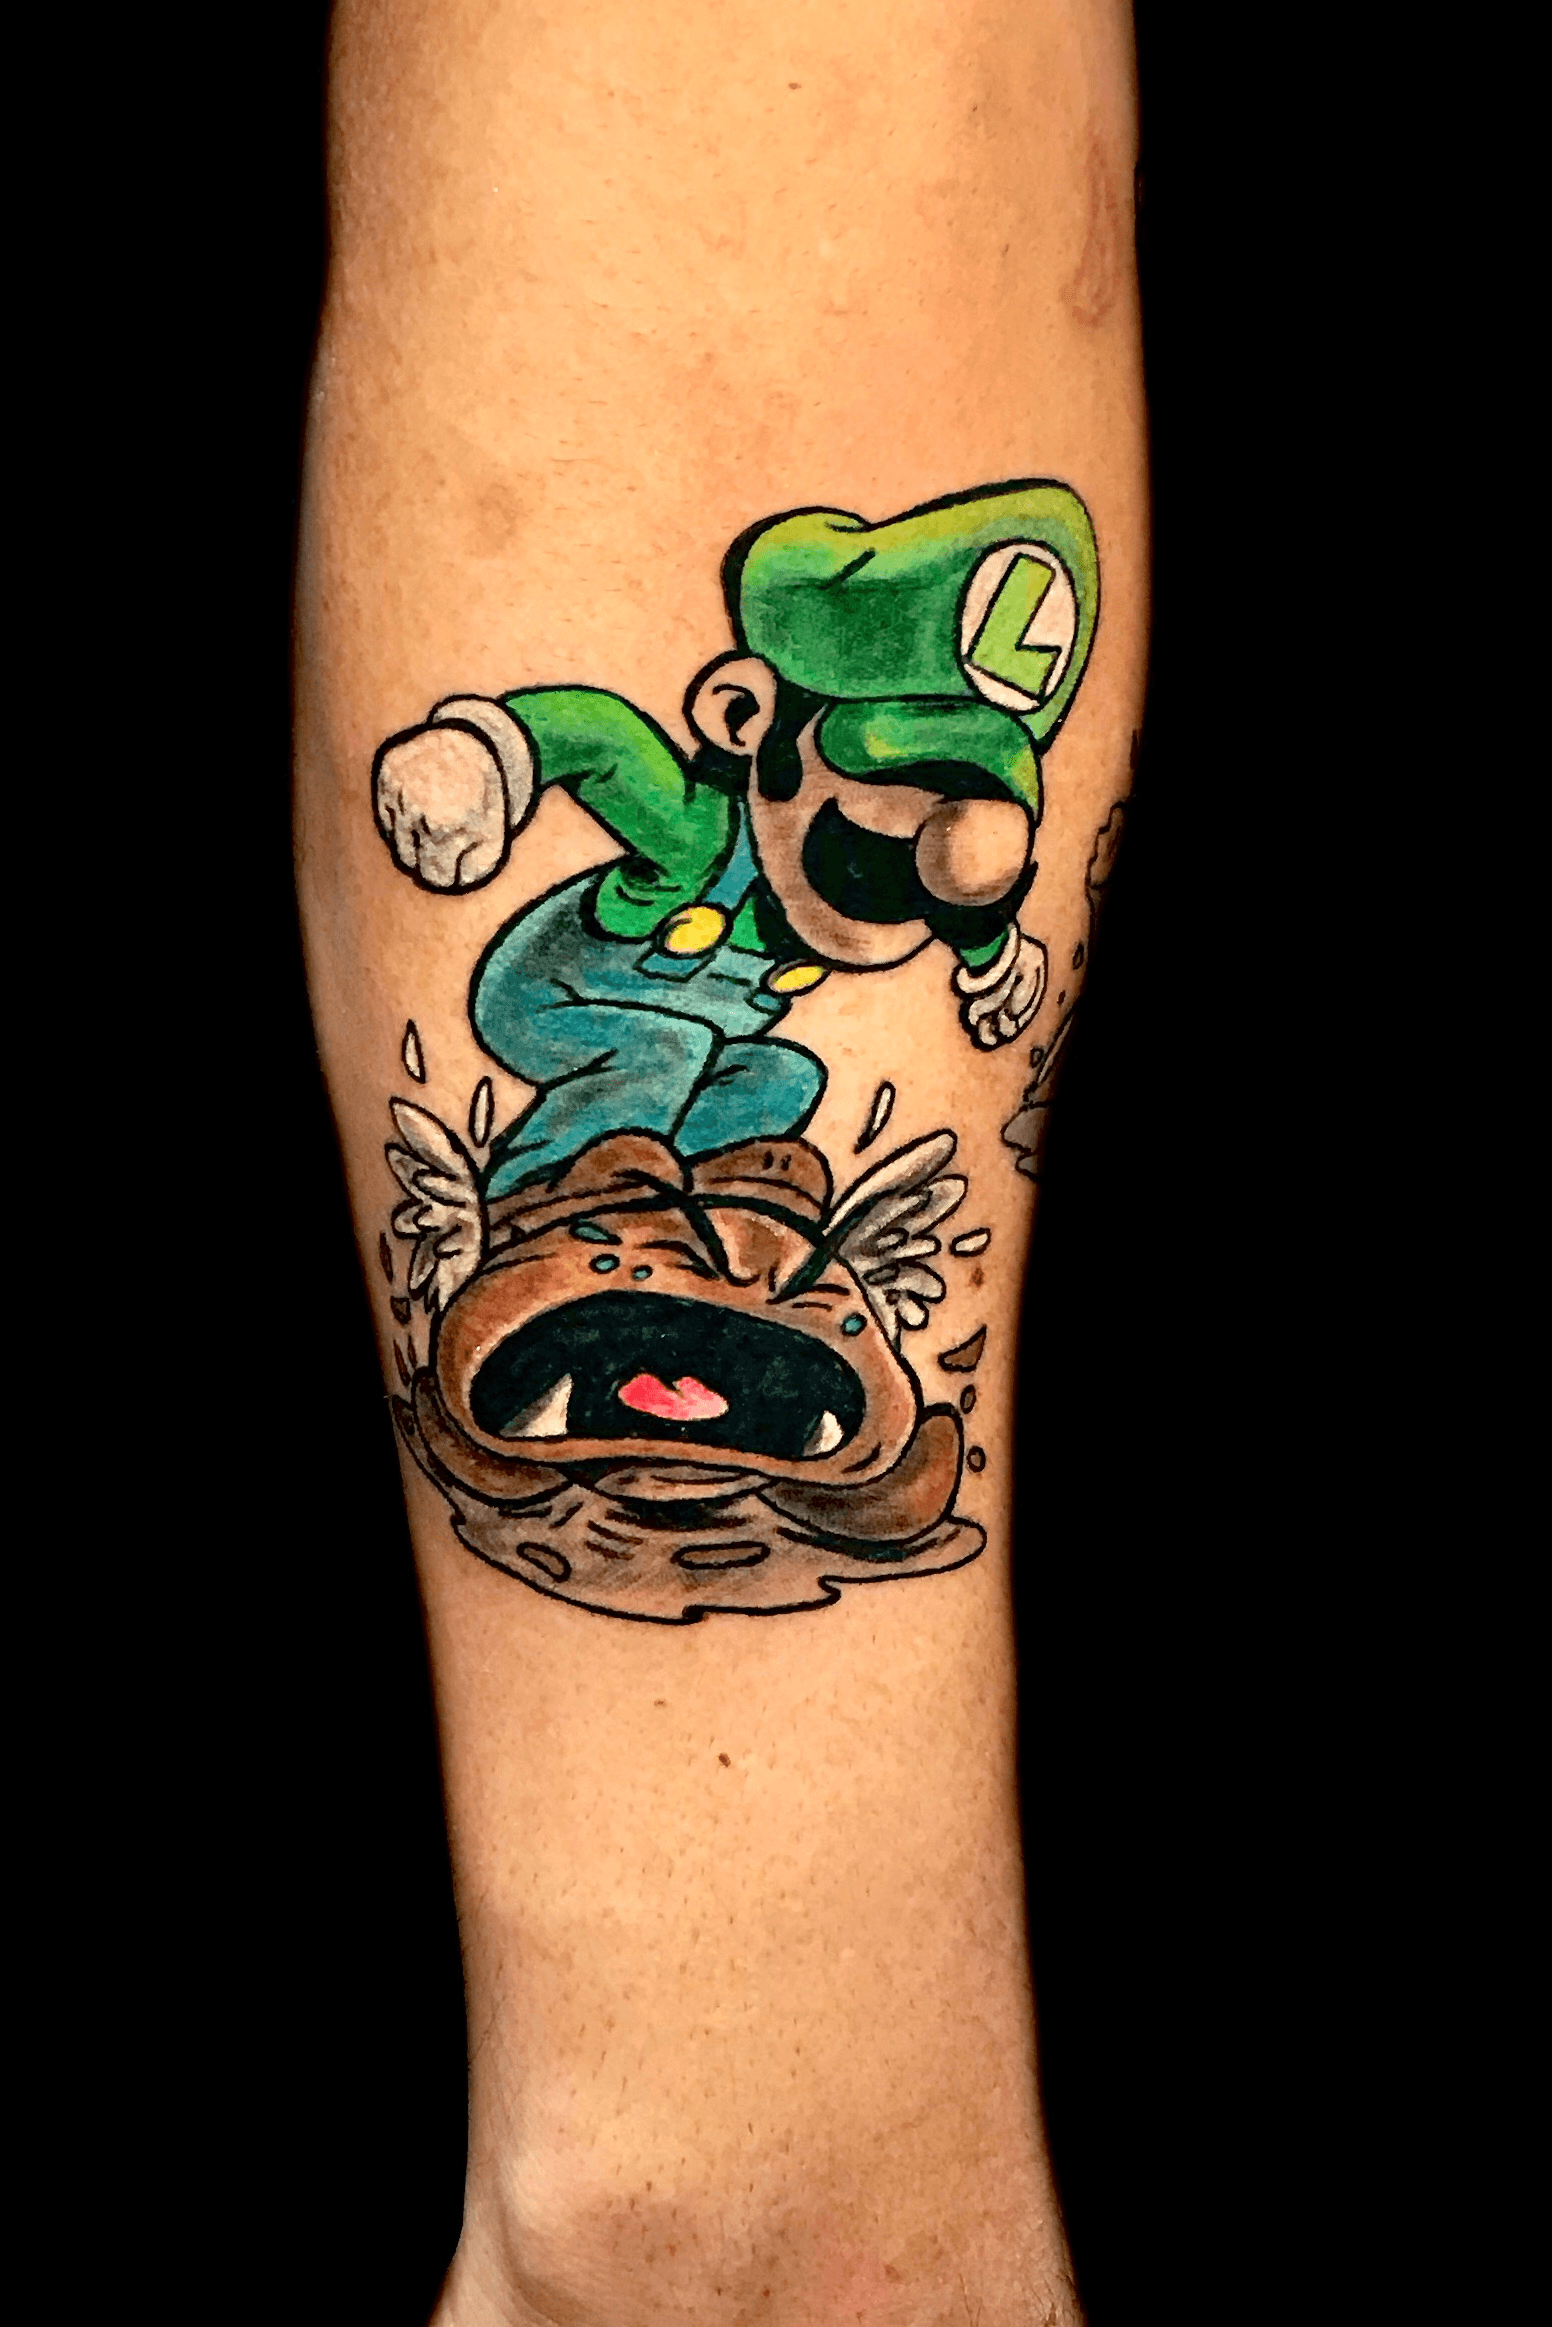 Luigis Mansion 3  Tattoo Illustration by Fabblood on DeviantArt